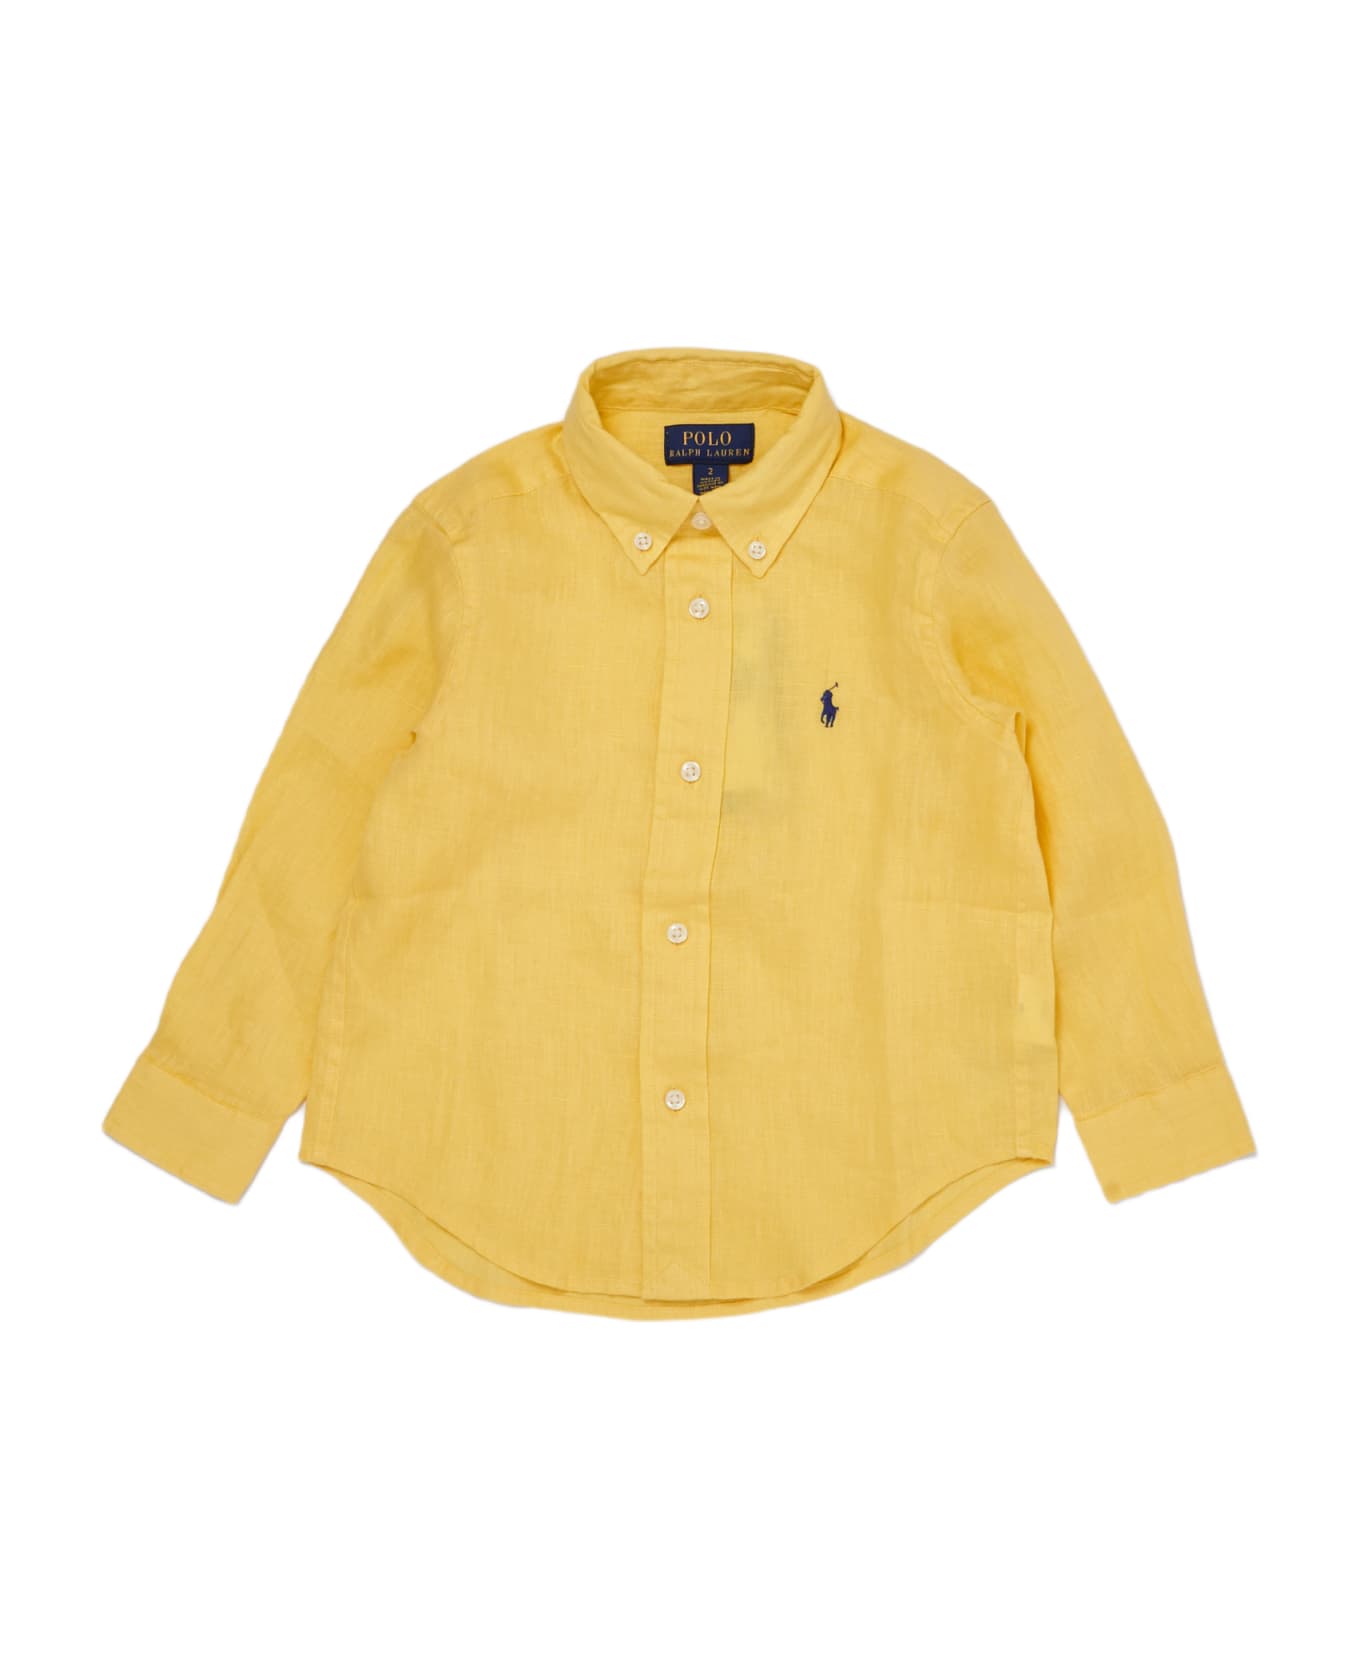 Polo Ralph Lauren Shirt Shirt - GIALLO シャツ